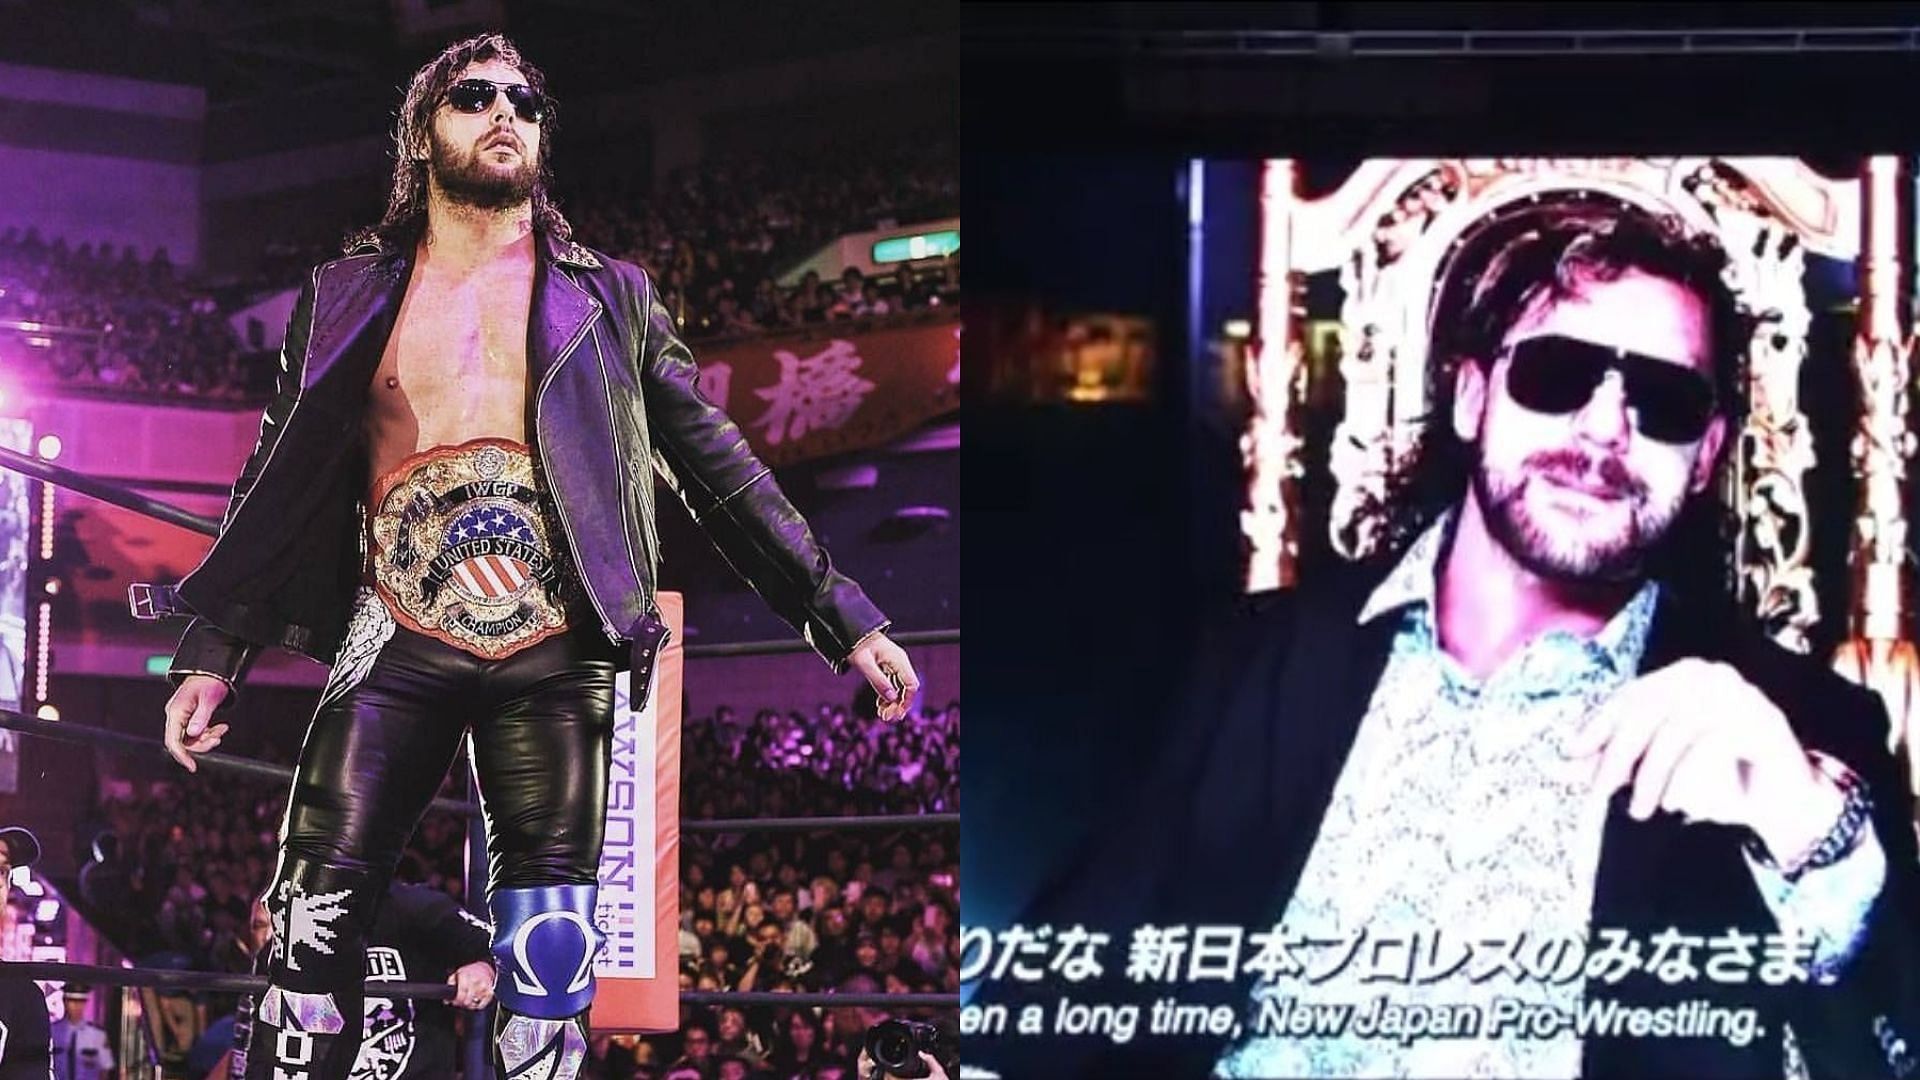 Kenny Omega is back in New Japan Pro Wrestling